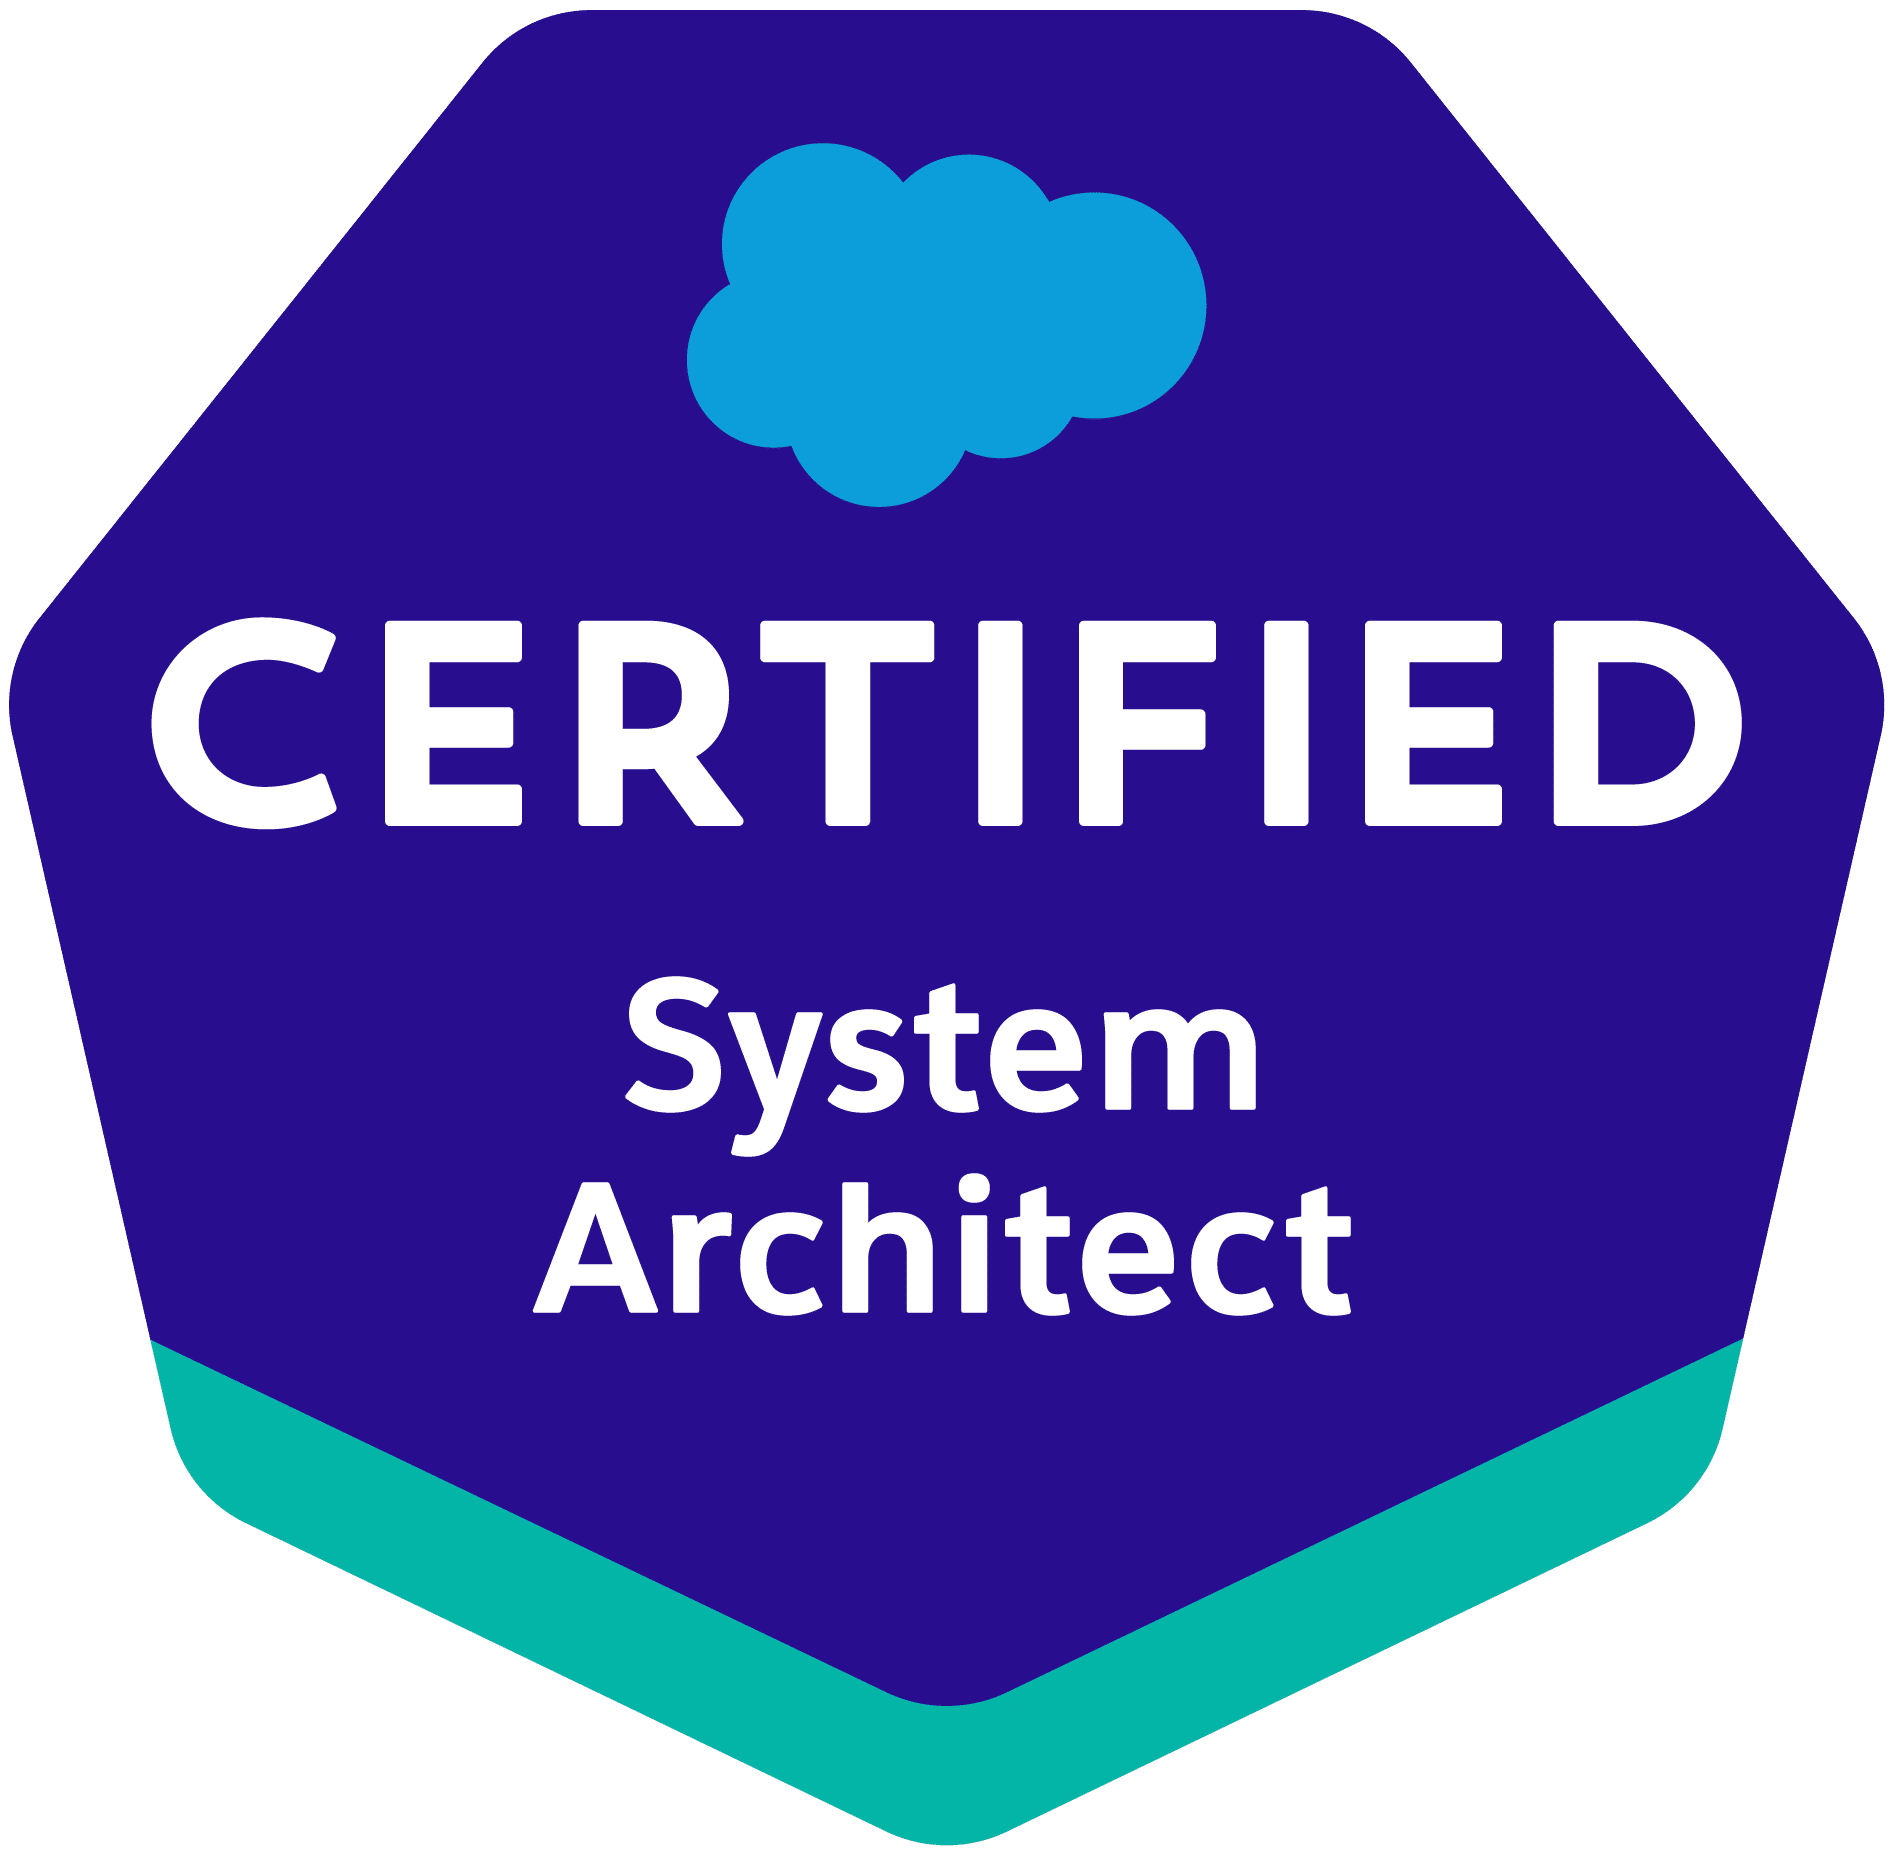 Salesforce Certified System Architect